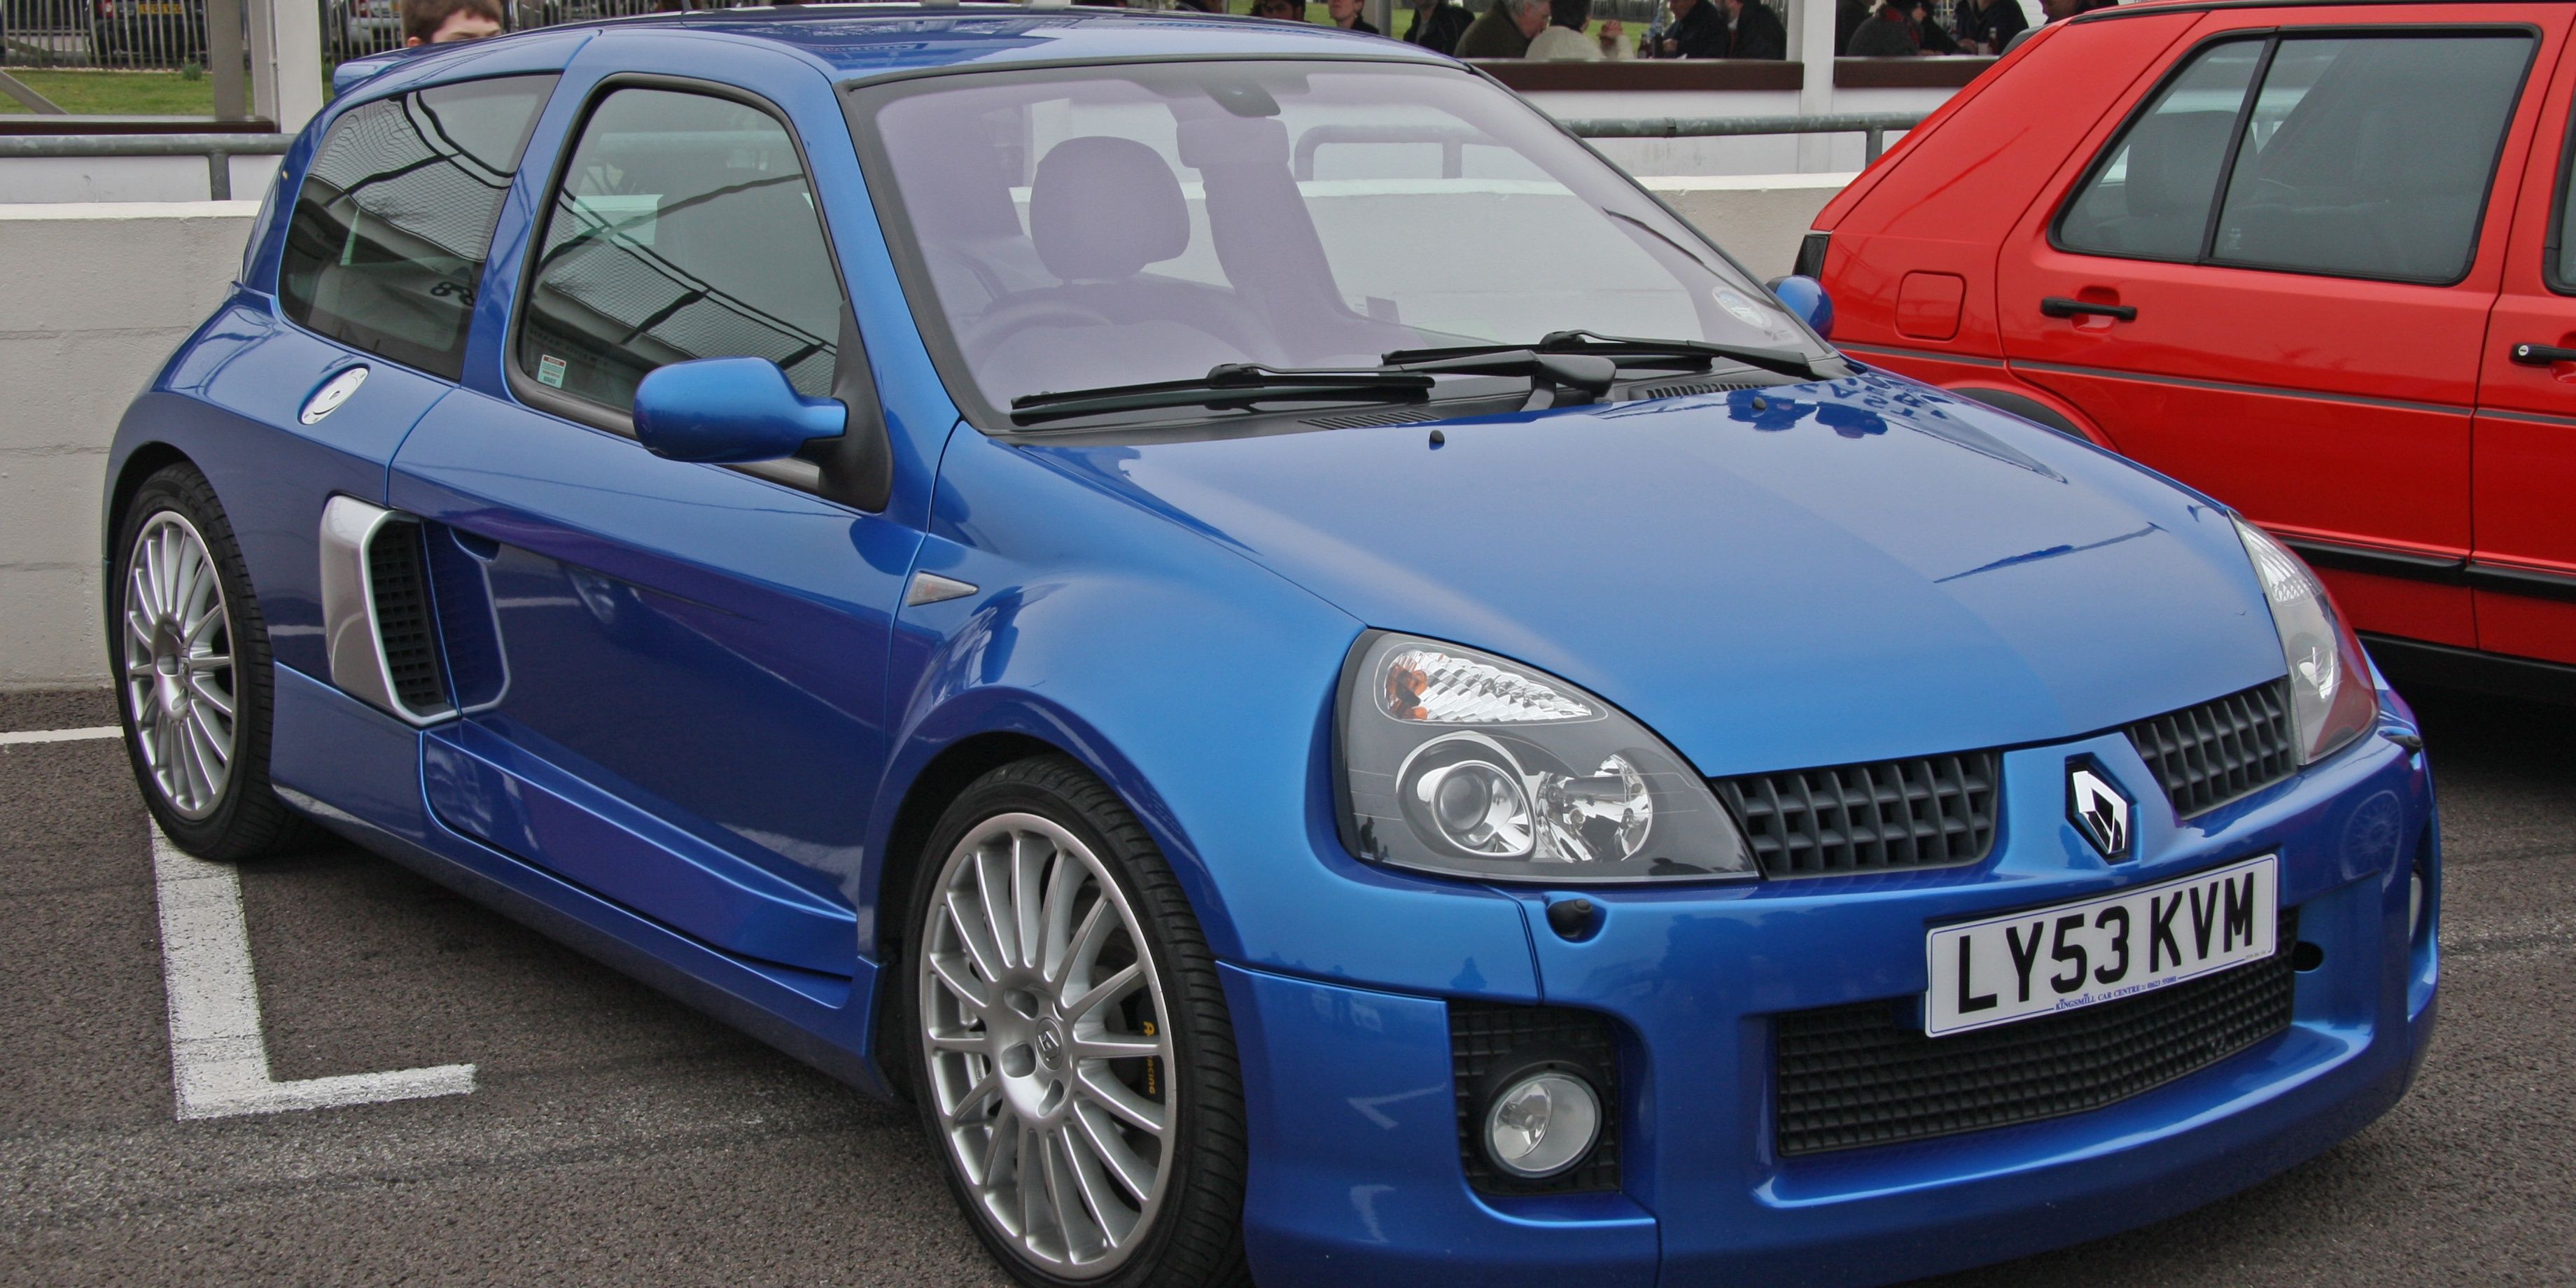 2003 Renault Clio V6 Cropped